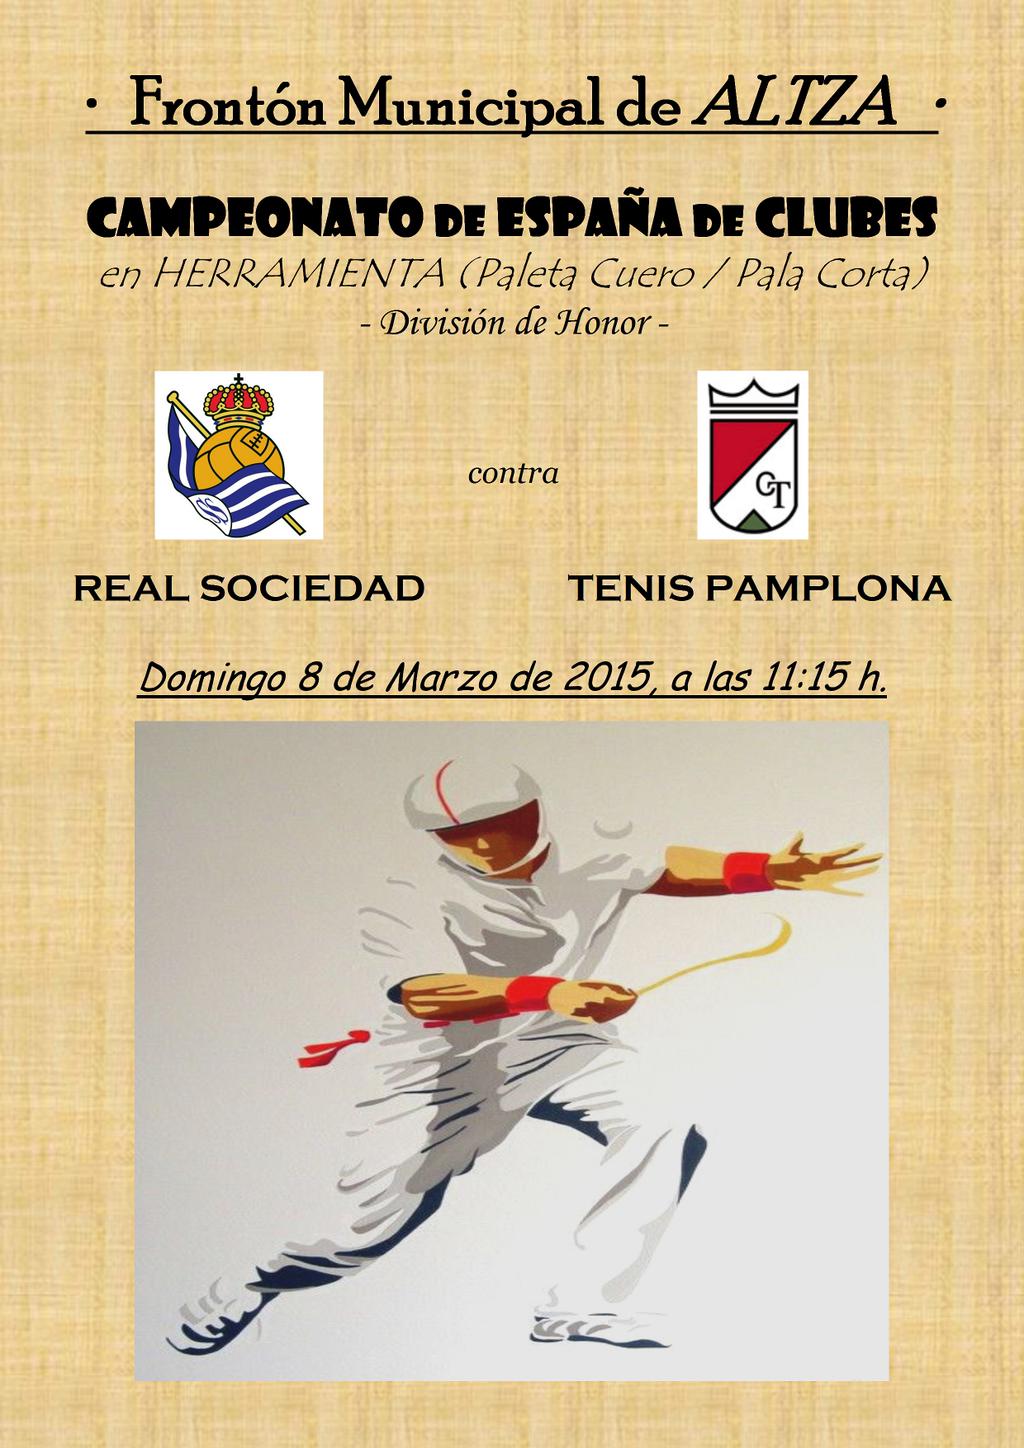 Espainiako Kluben Txapelketa (Pala motza/larrua): Real Sociedad- RS Tenis